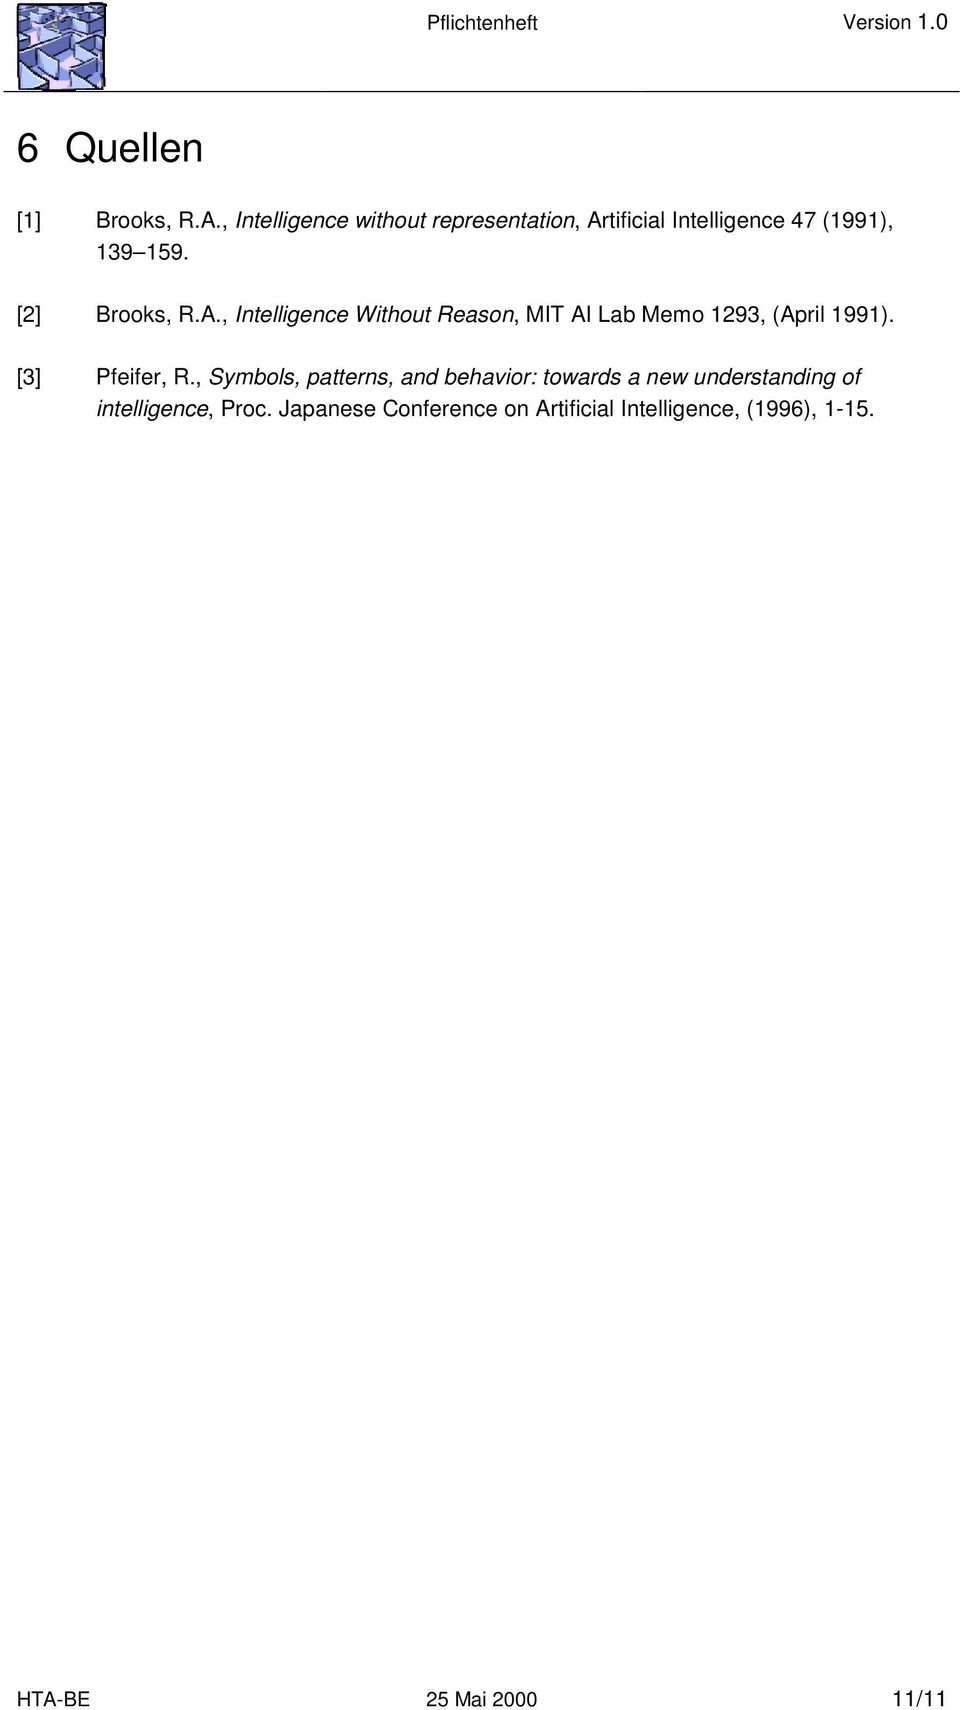 [2] Brooks, R.A., Intelligence Without Reason, MIT AI Lab Memo 1293, (April 1991).